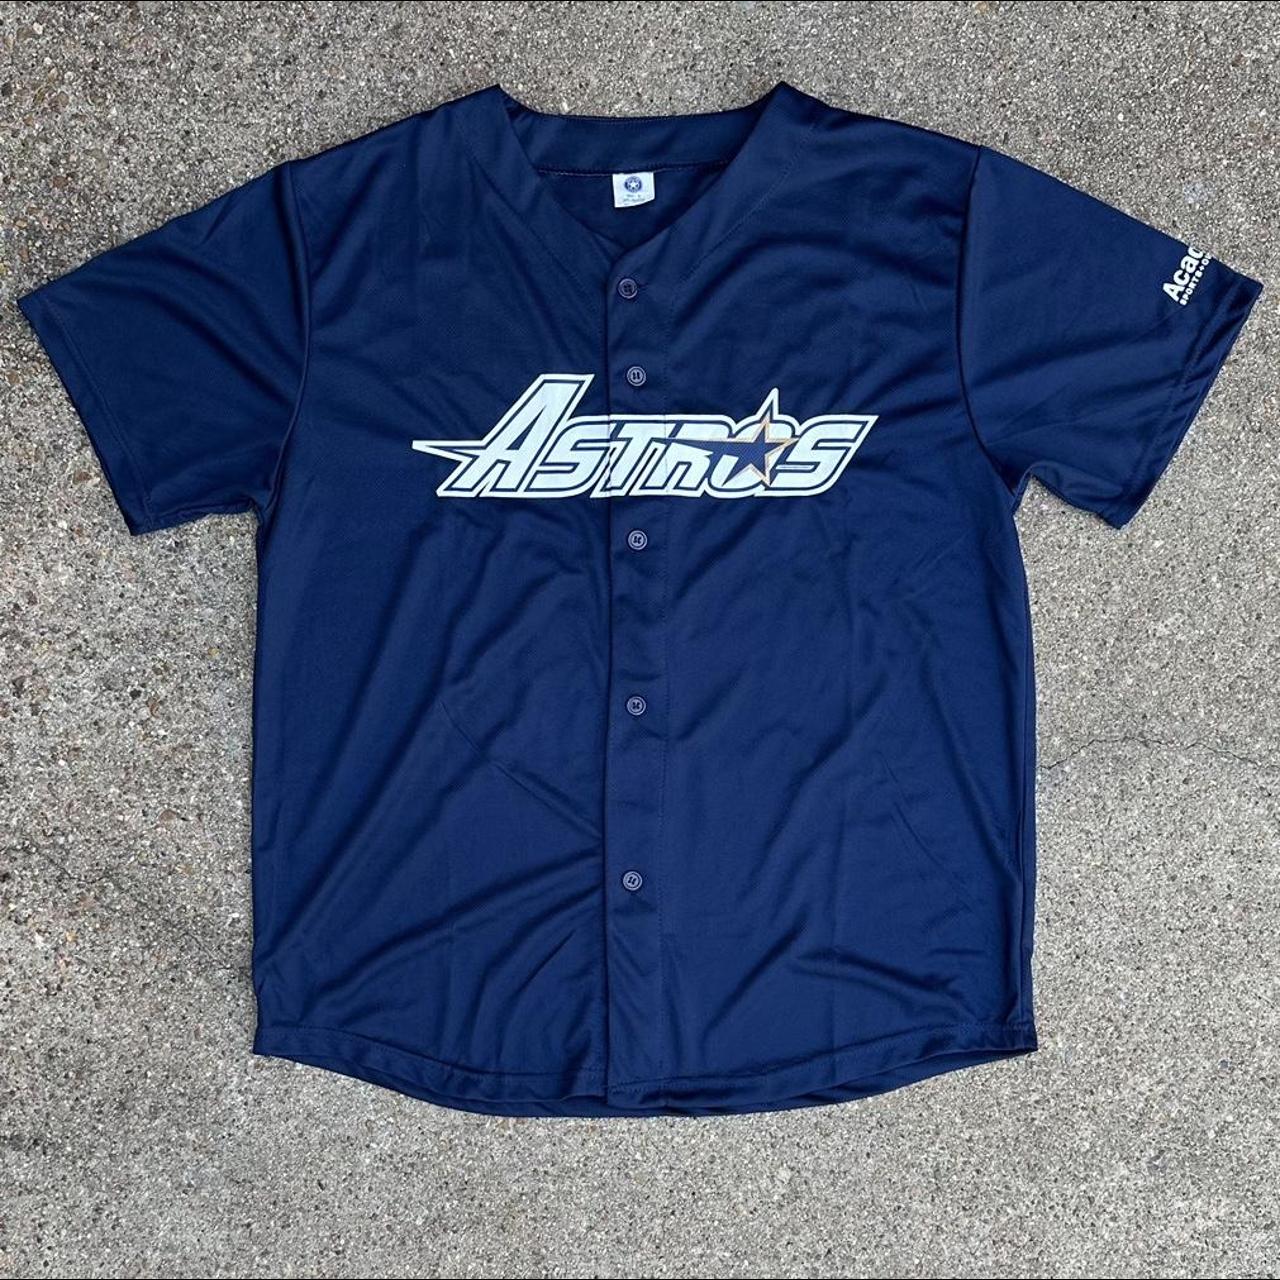 Vintage Style Astros Jersey “Altuve” •No - Depop